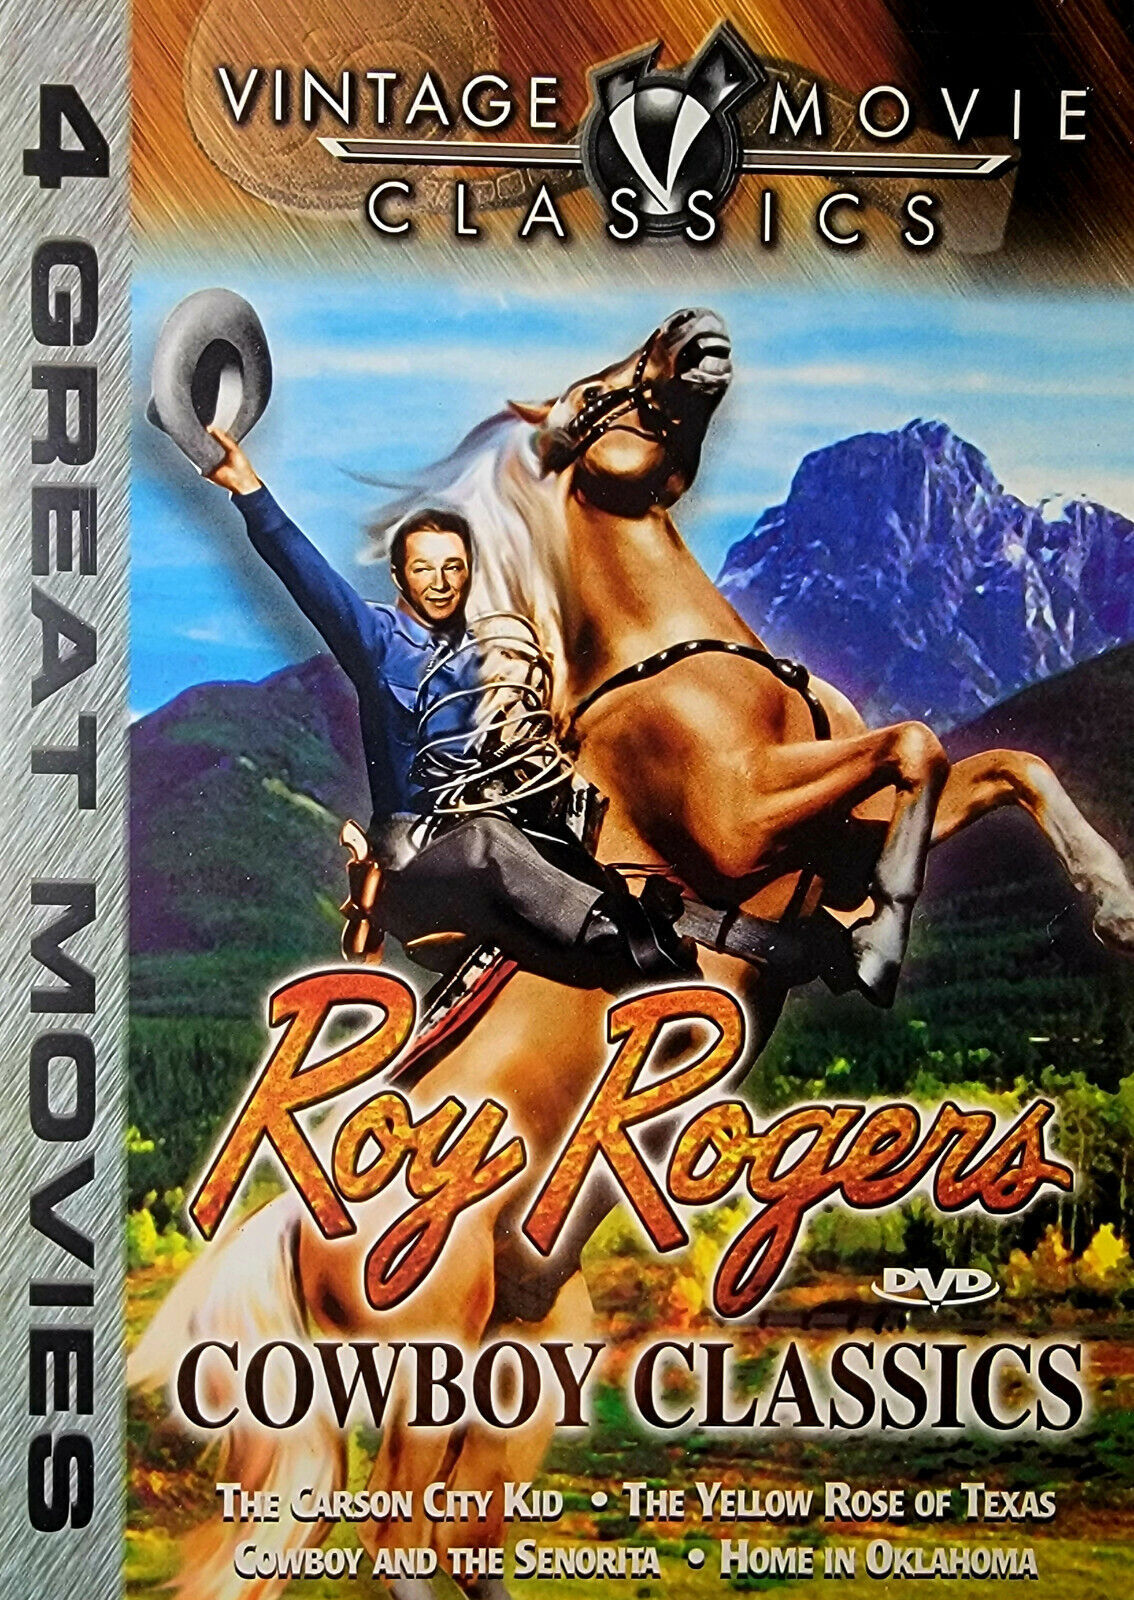 Roy Rogers Cowboy Classics DVD Set (4) 1940's Vintage Movies NEW SEALED